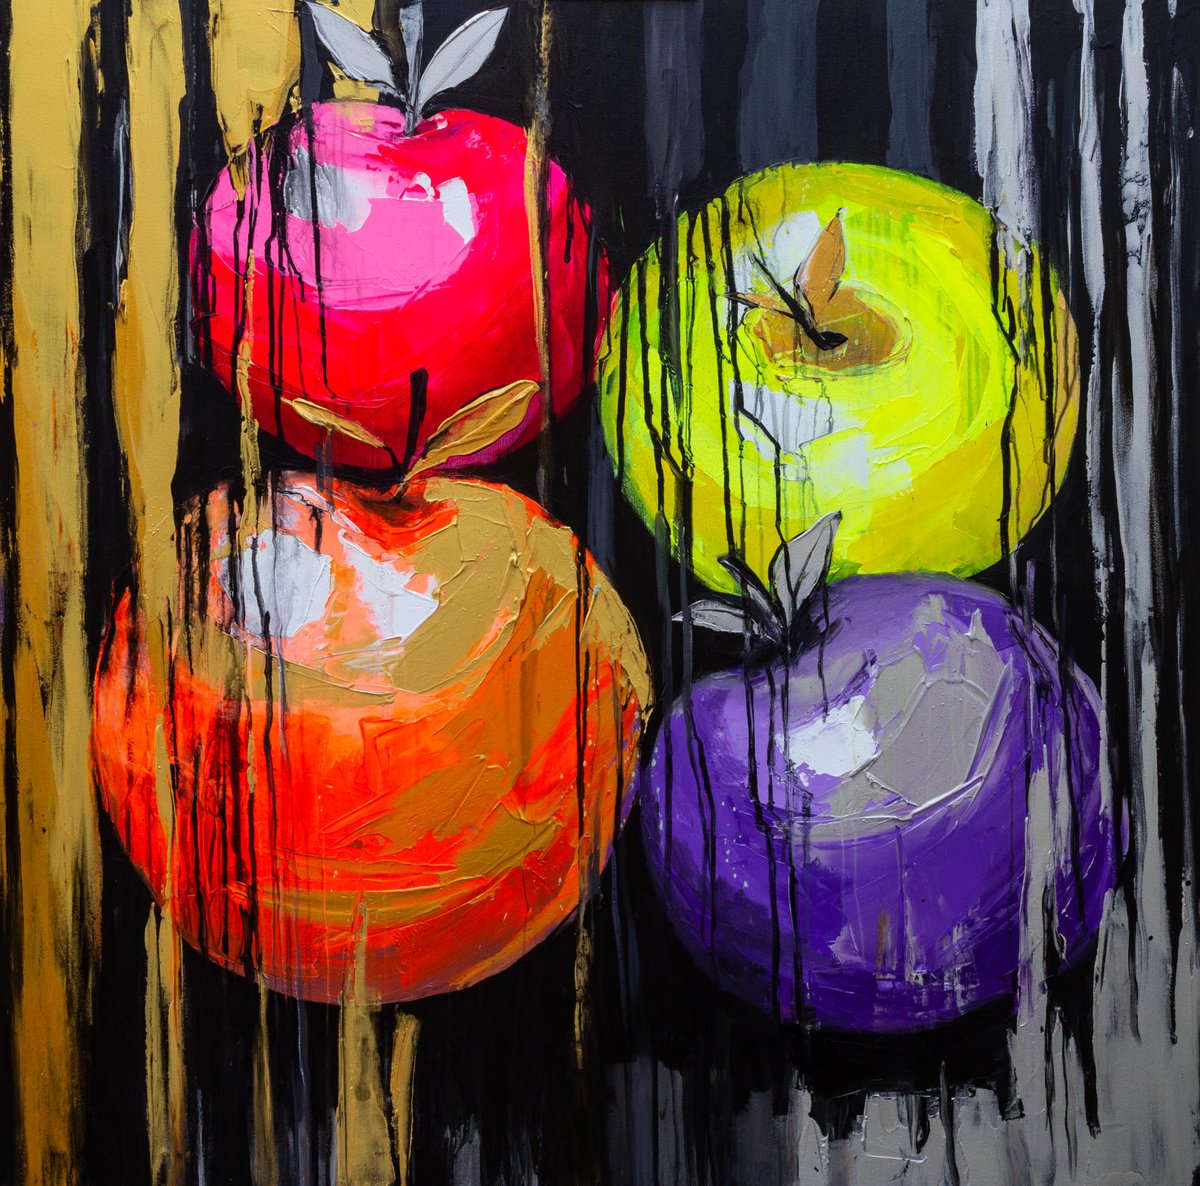 Festive apples by Lana Frey